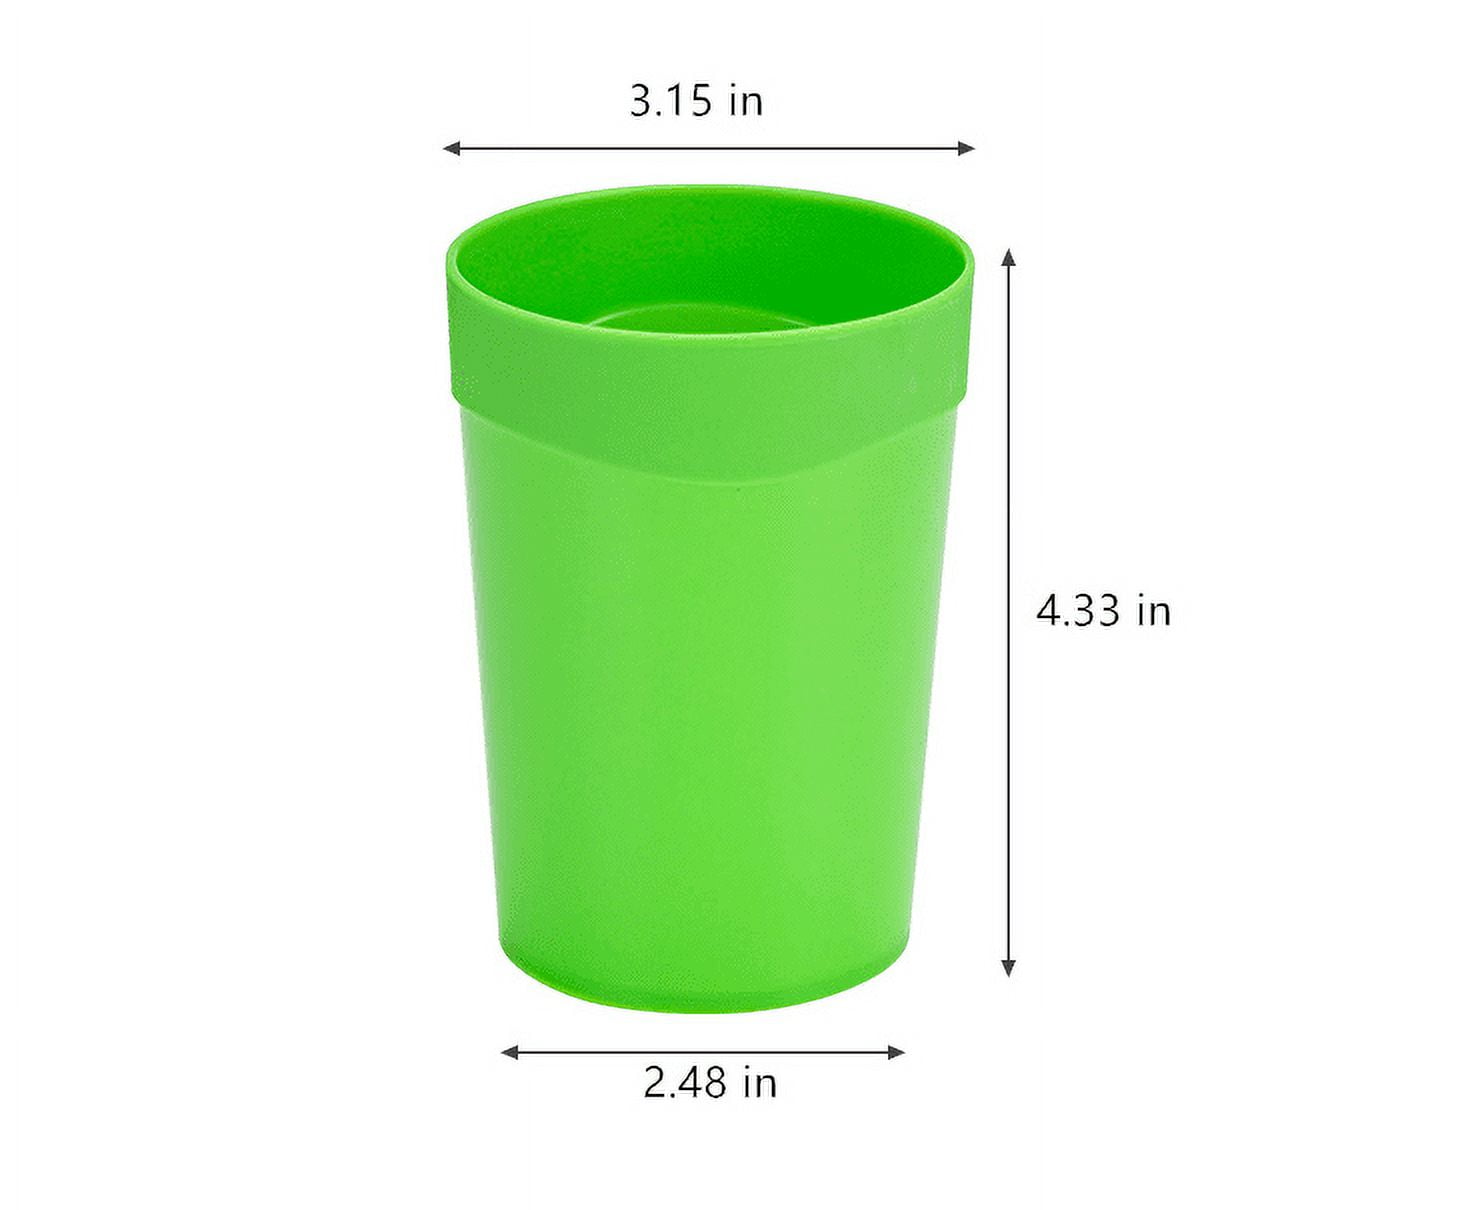 Triani 12 oz Kids Tumbler Set, 7 Pack – Plastic Kids Cups with